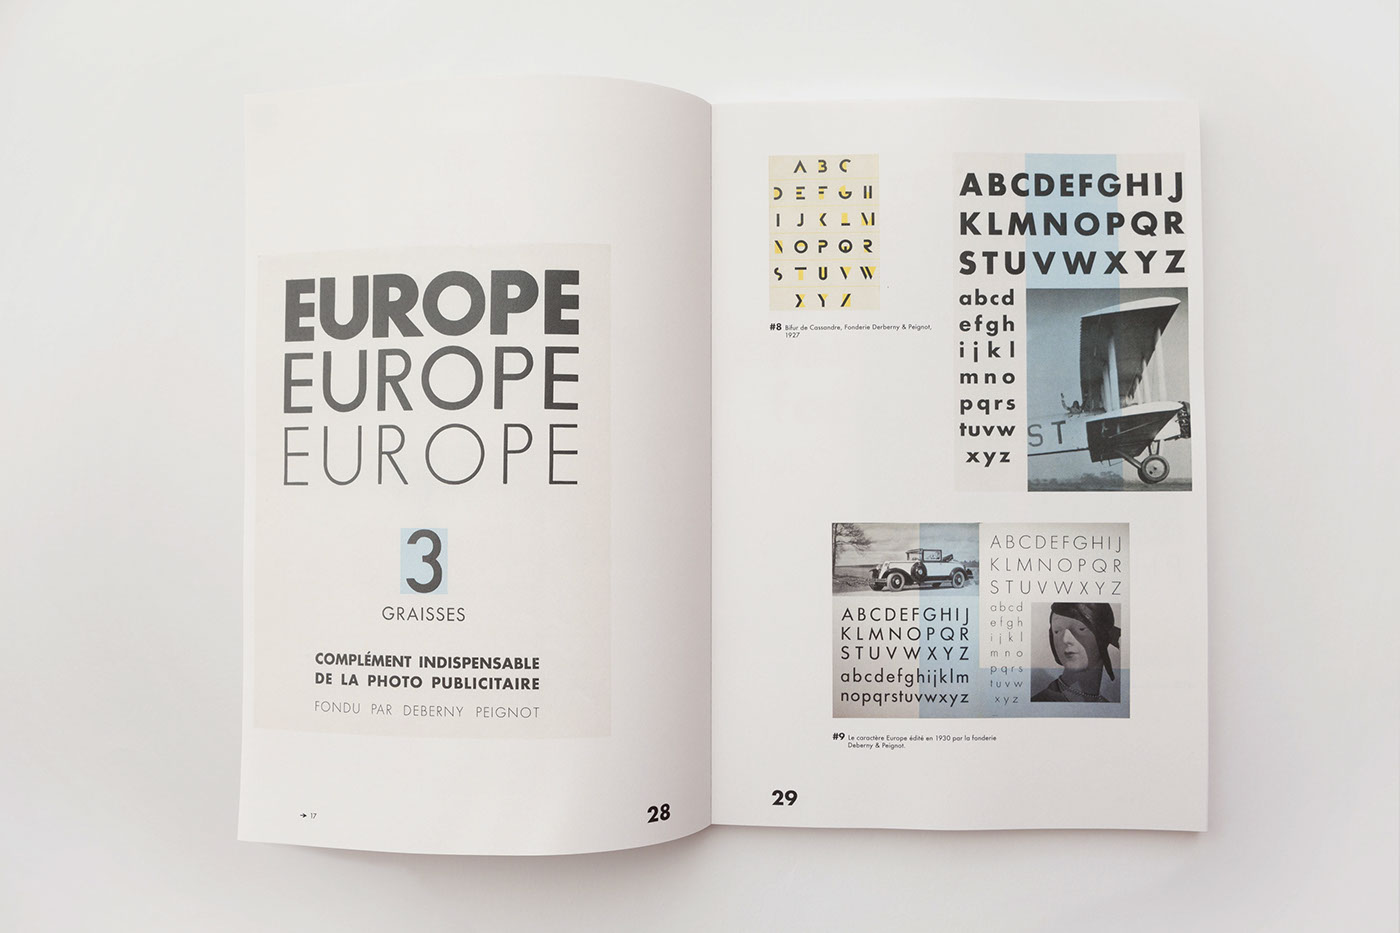 Futura memories image Typeface font book edition ABMstudio Paris